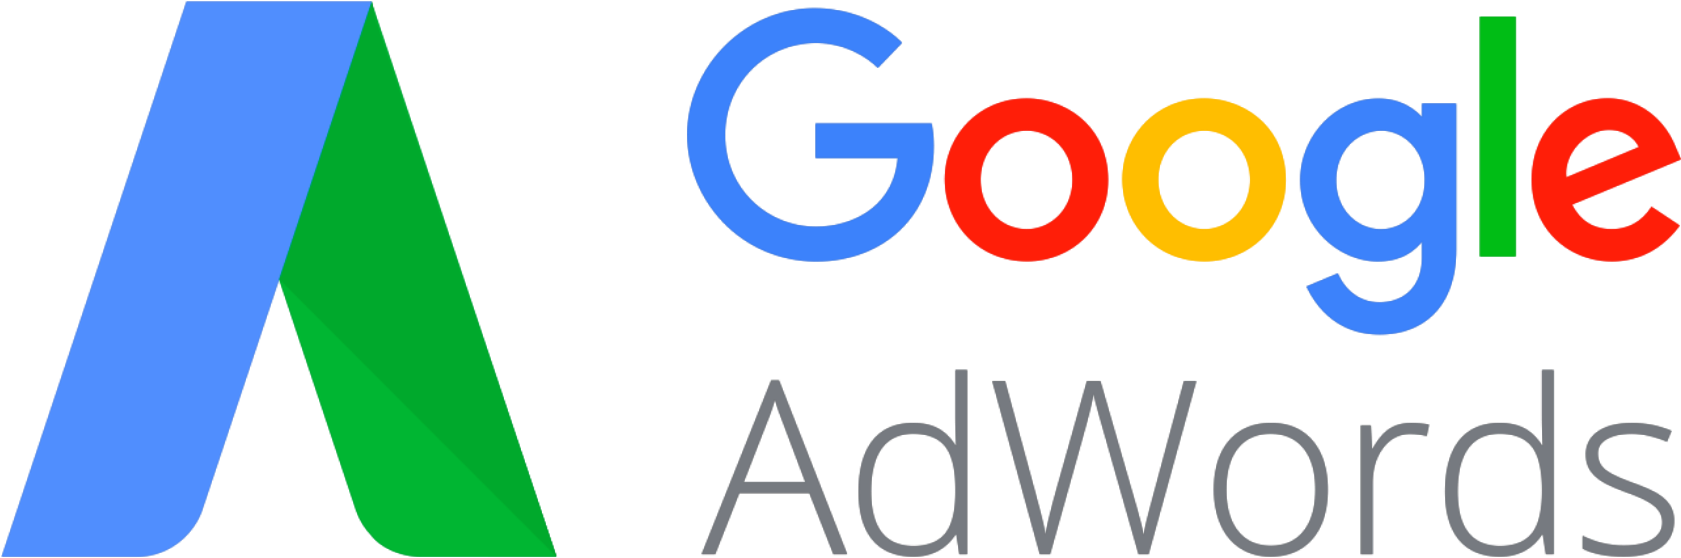 Google Adwords Logo Png Large - Google Adwords Logo Png Clipart (1692x573), Png Download